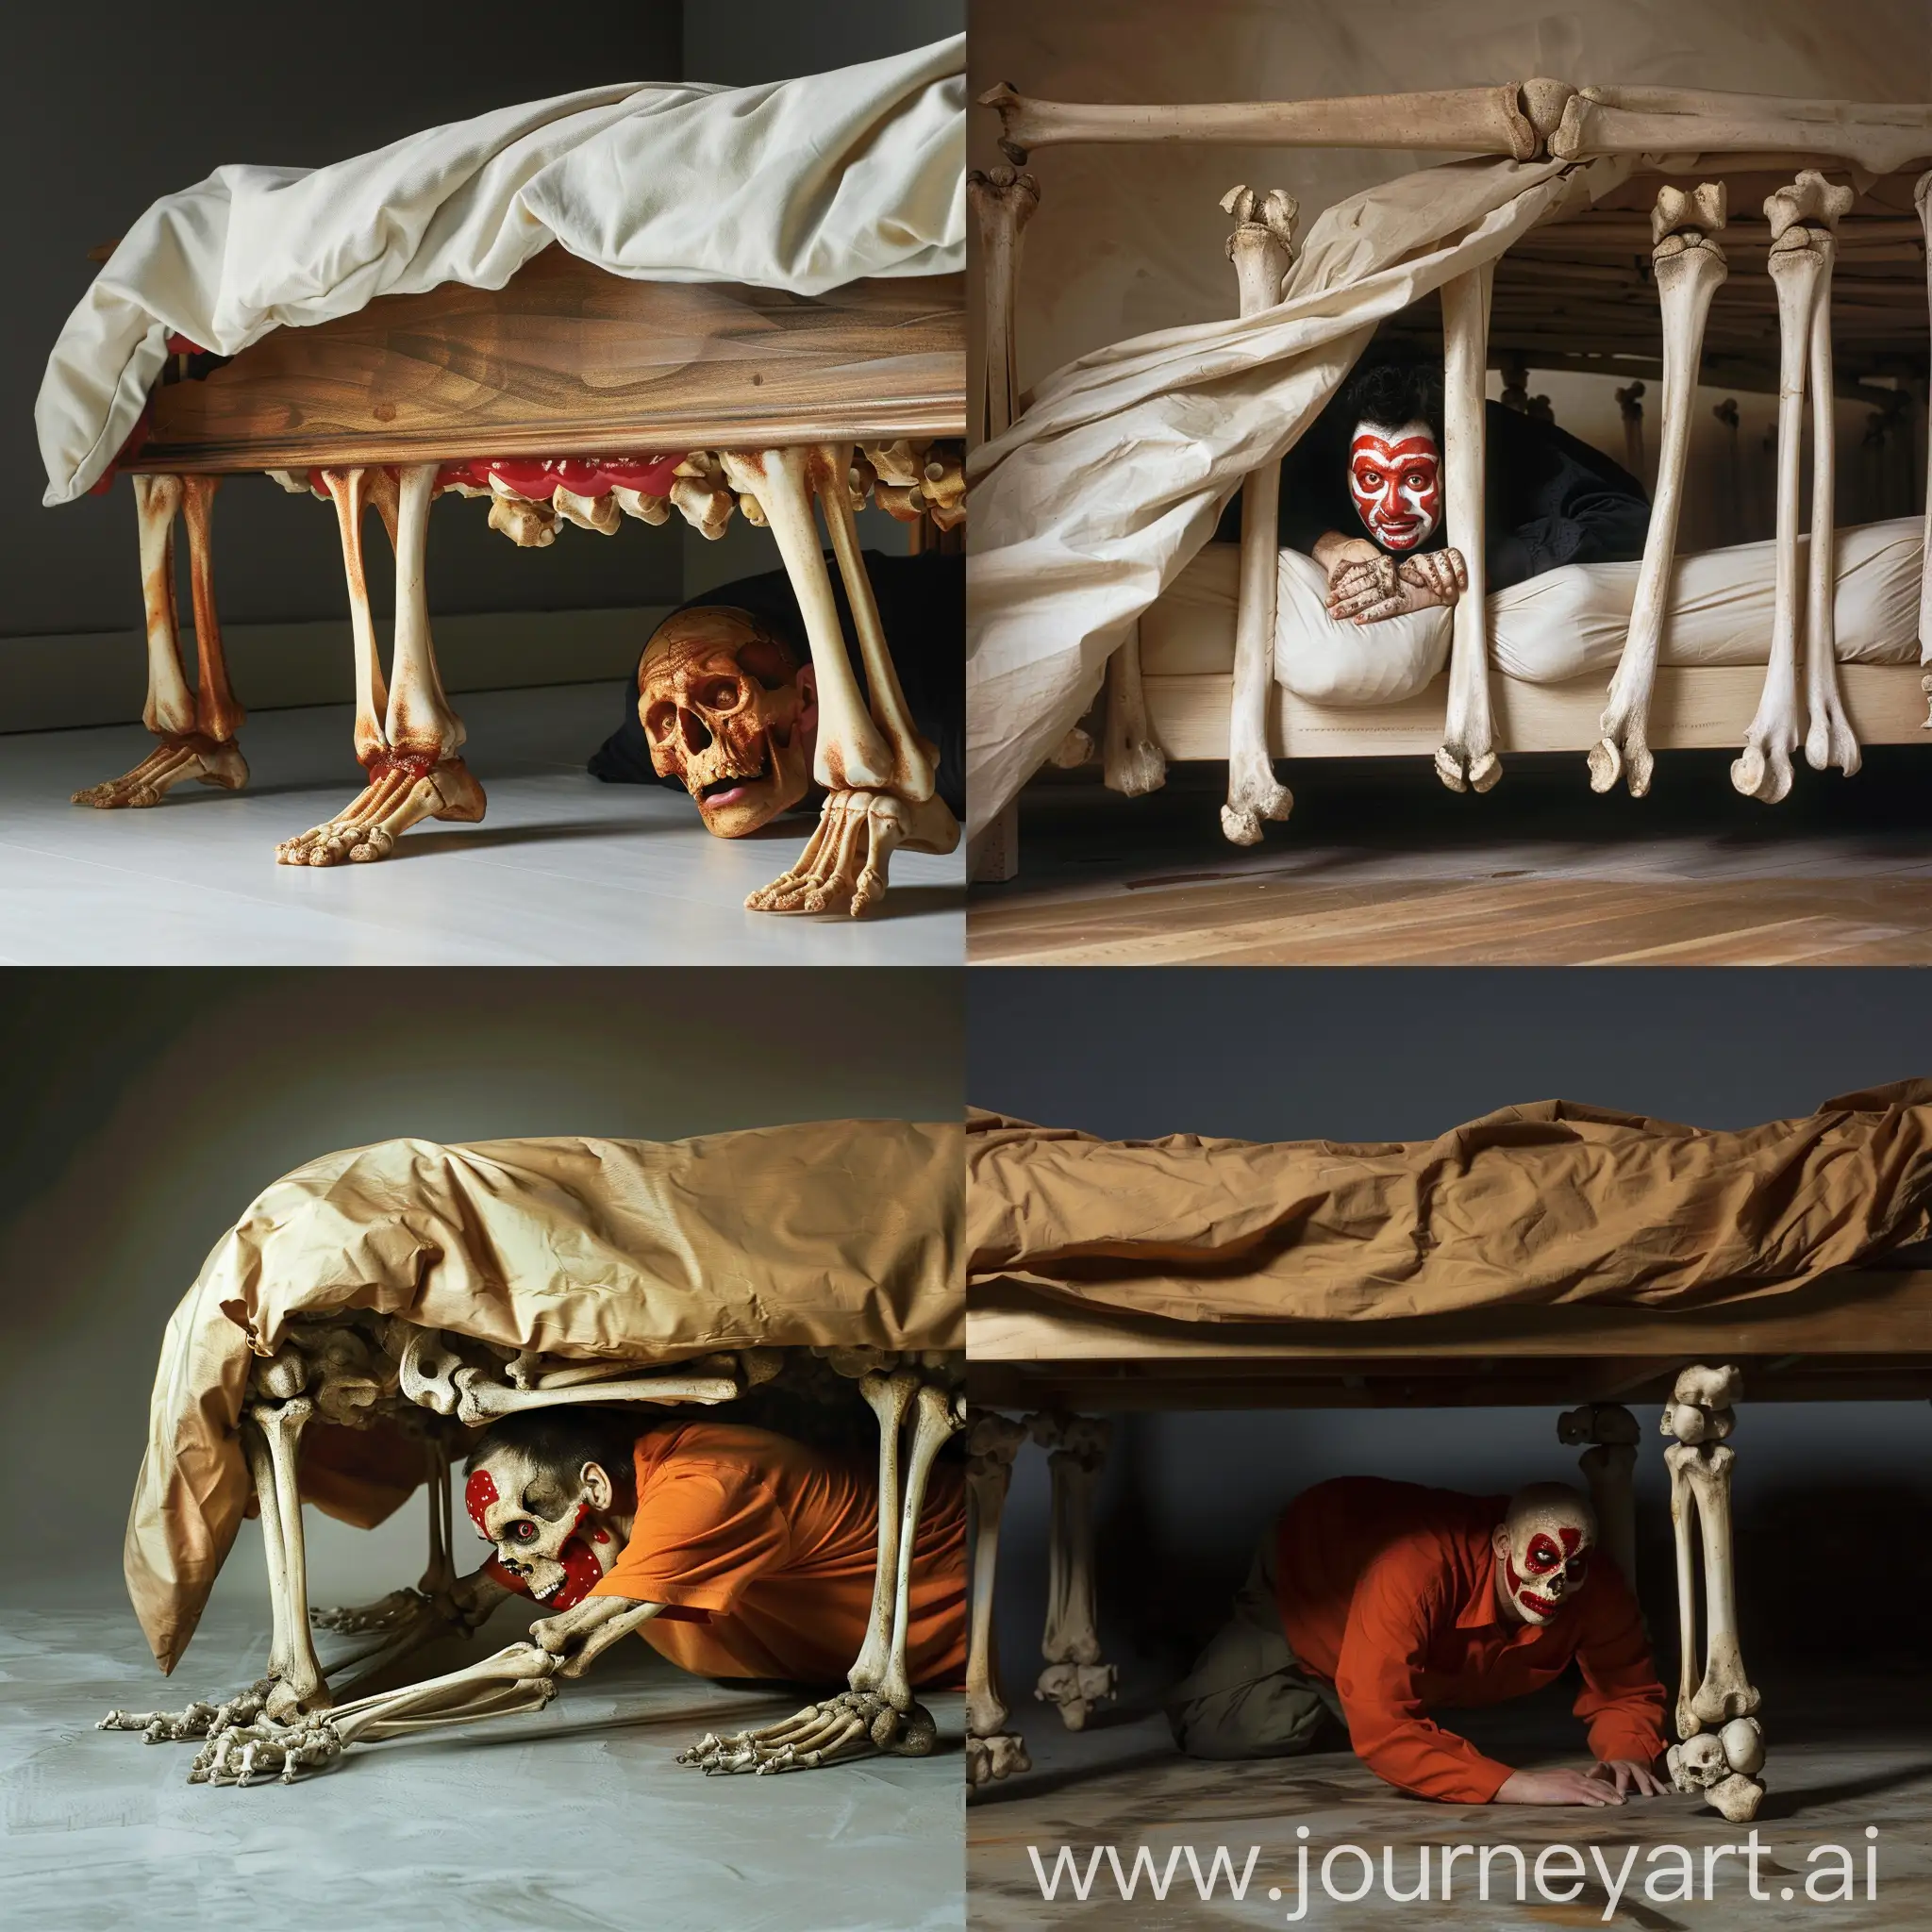 Ketchup faced man crawling under bed made of human bones not scary